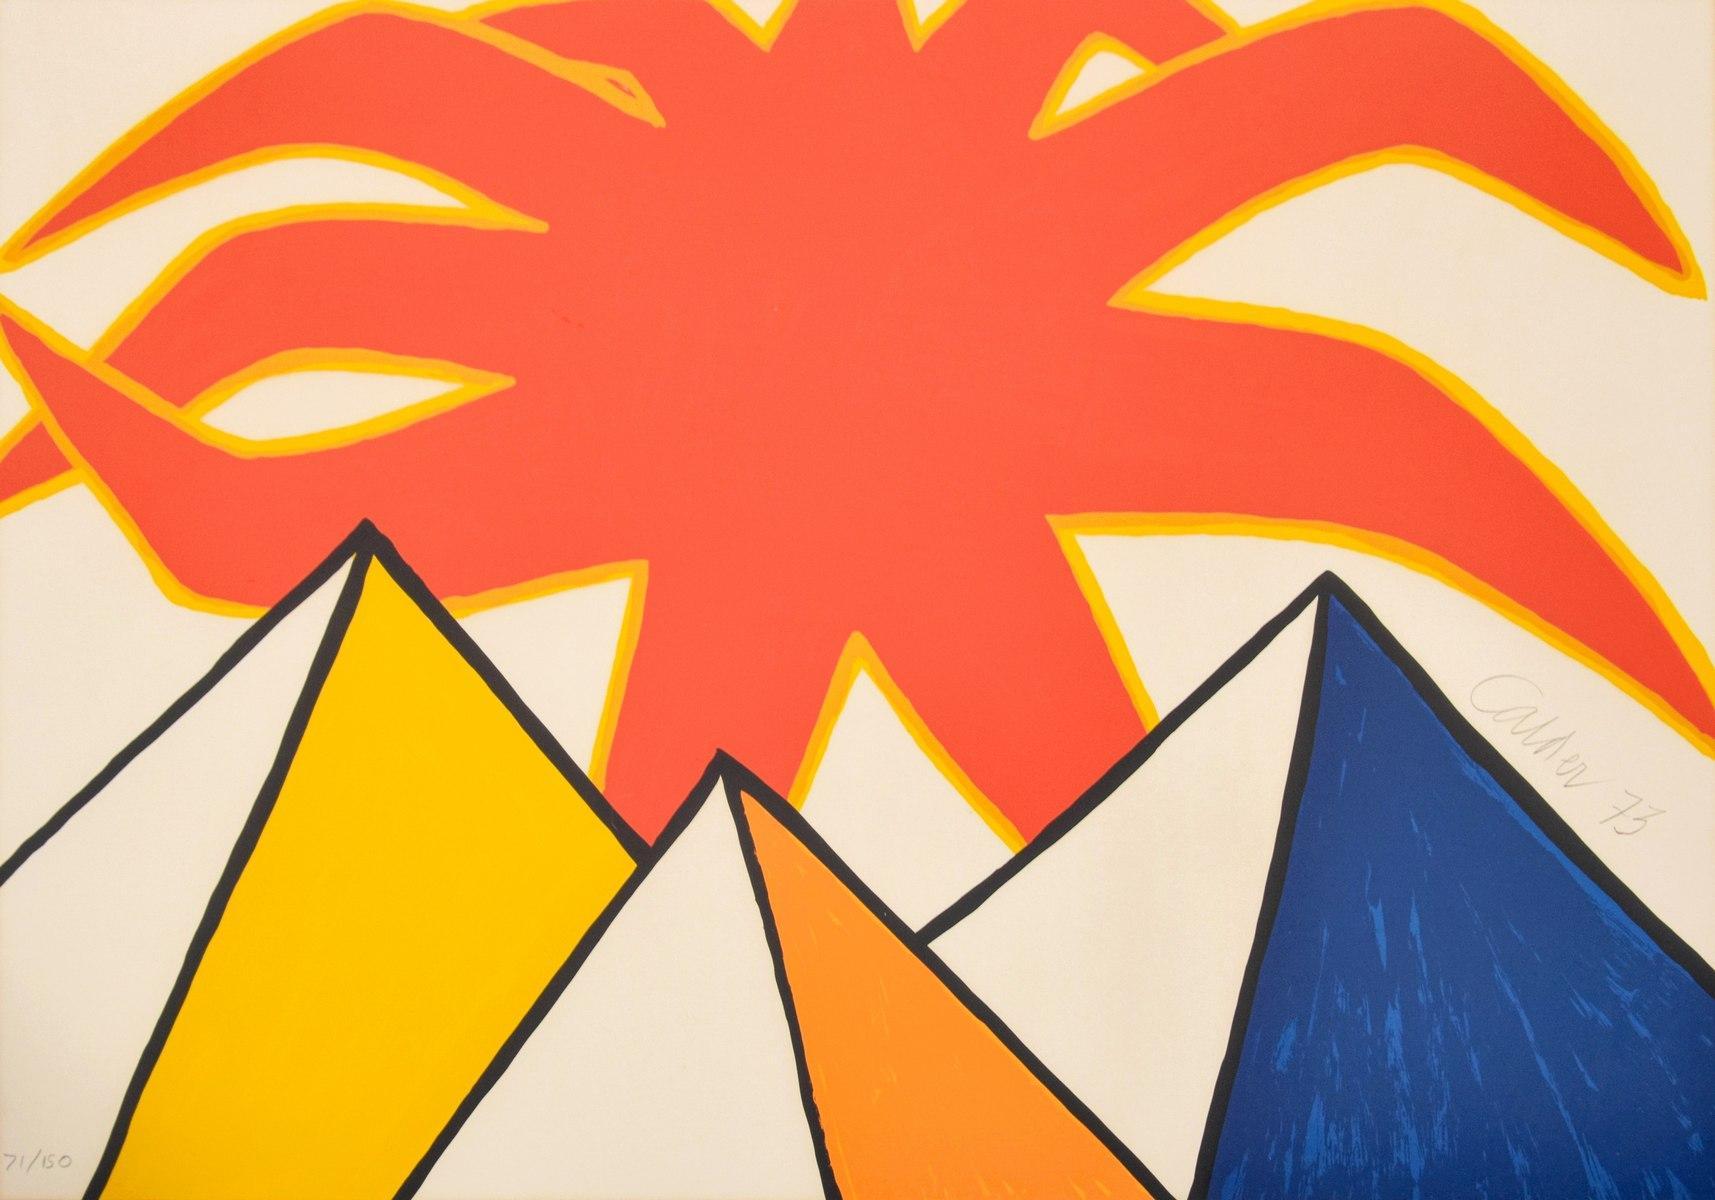 Abstract Print Alexander Calder - Soleil et pyramides, 1973